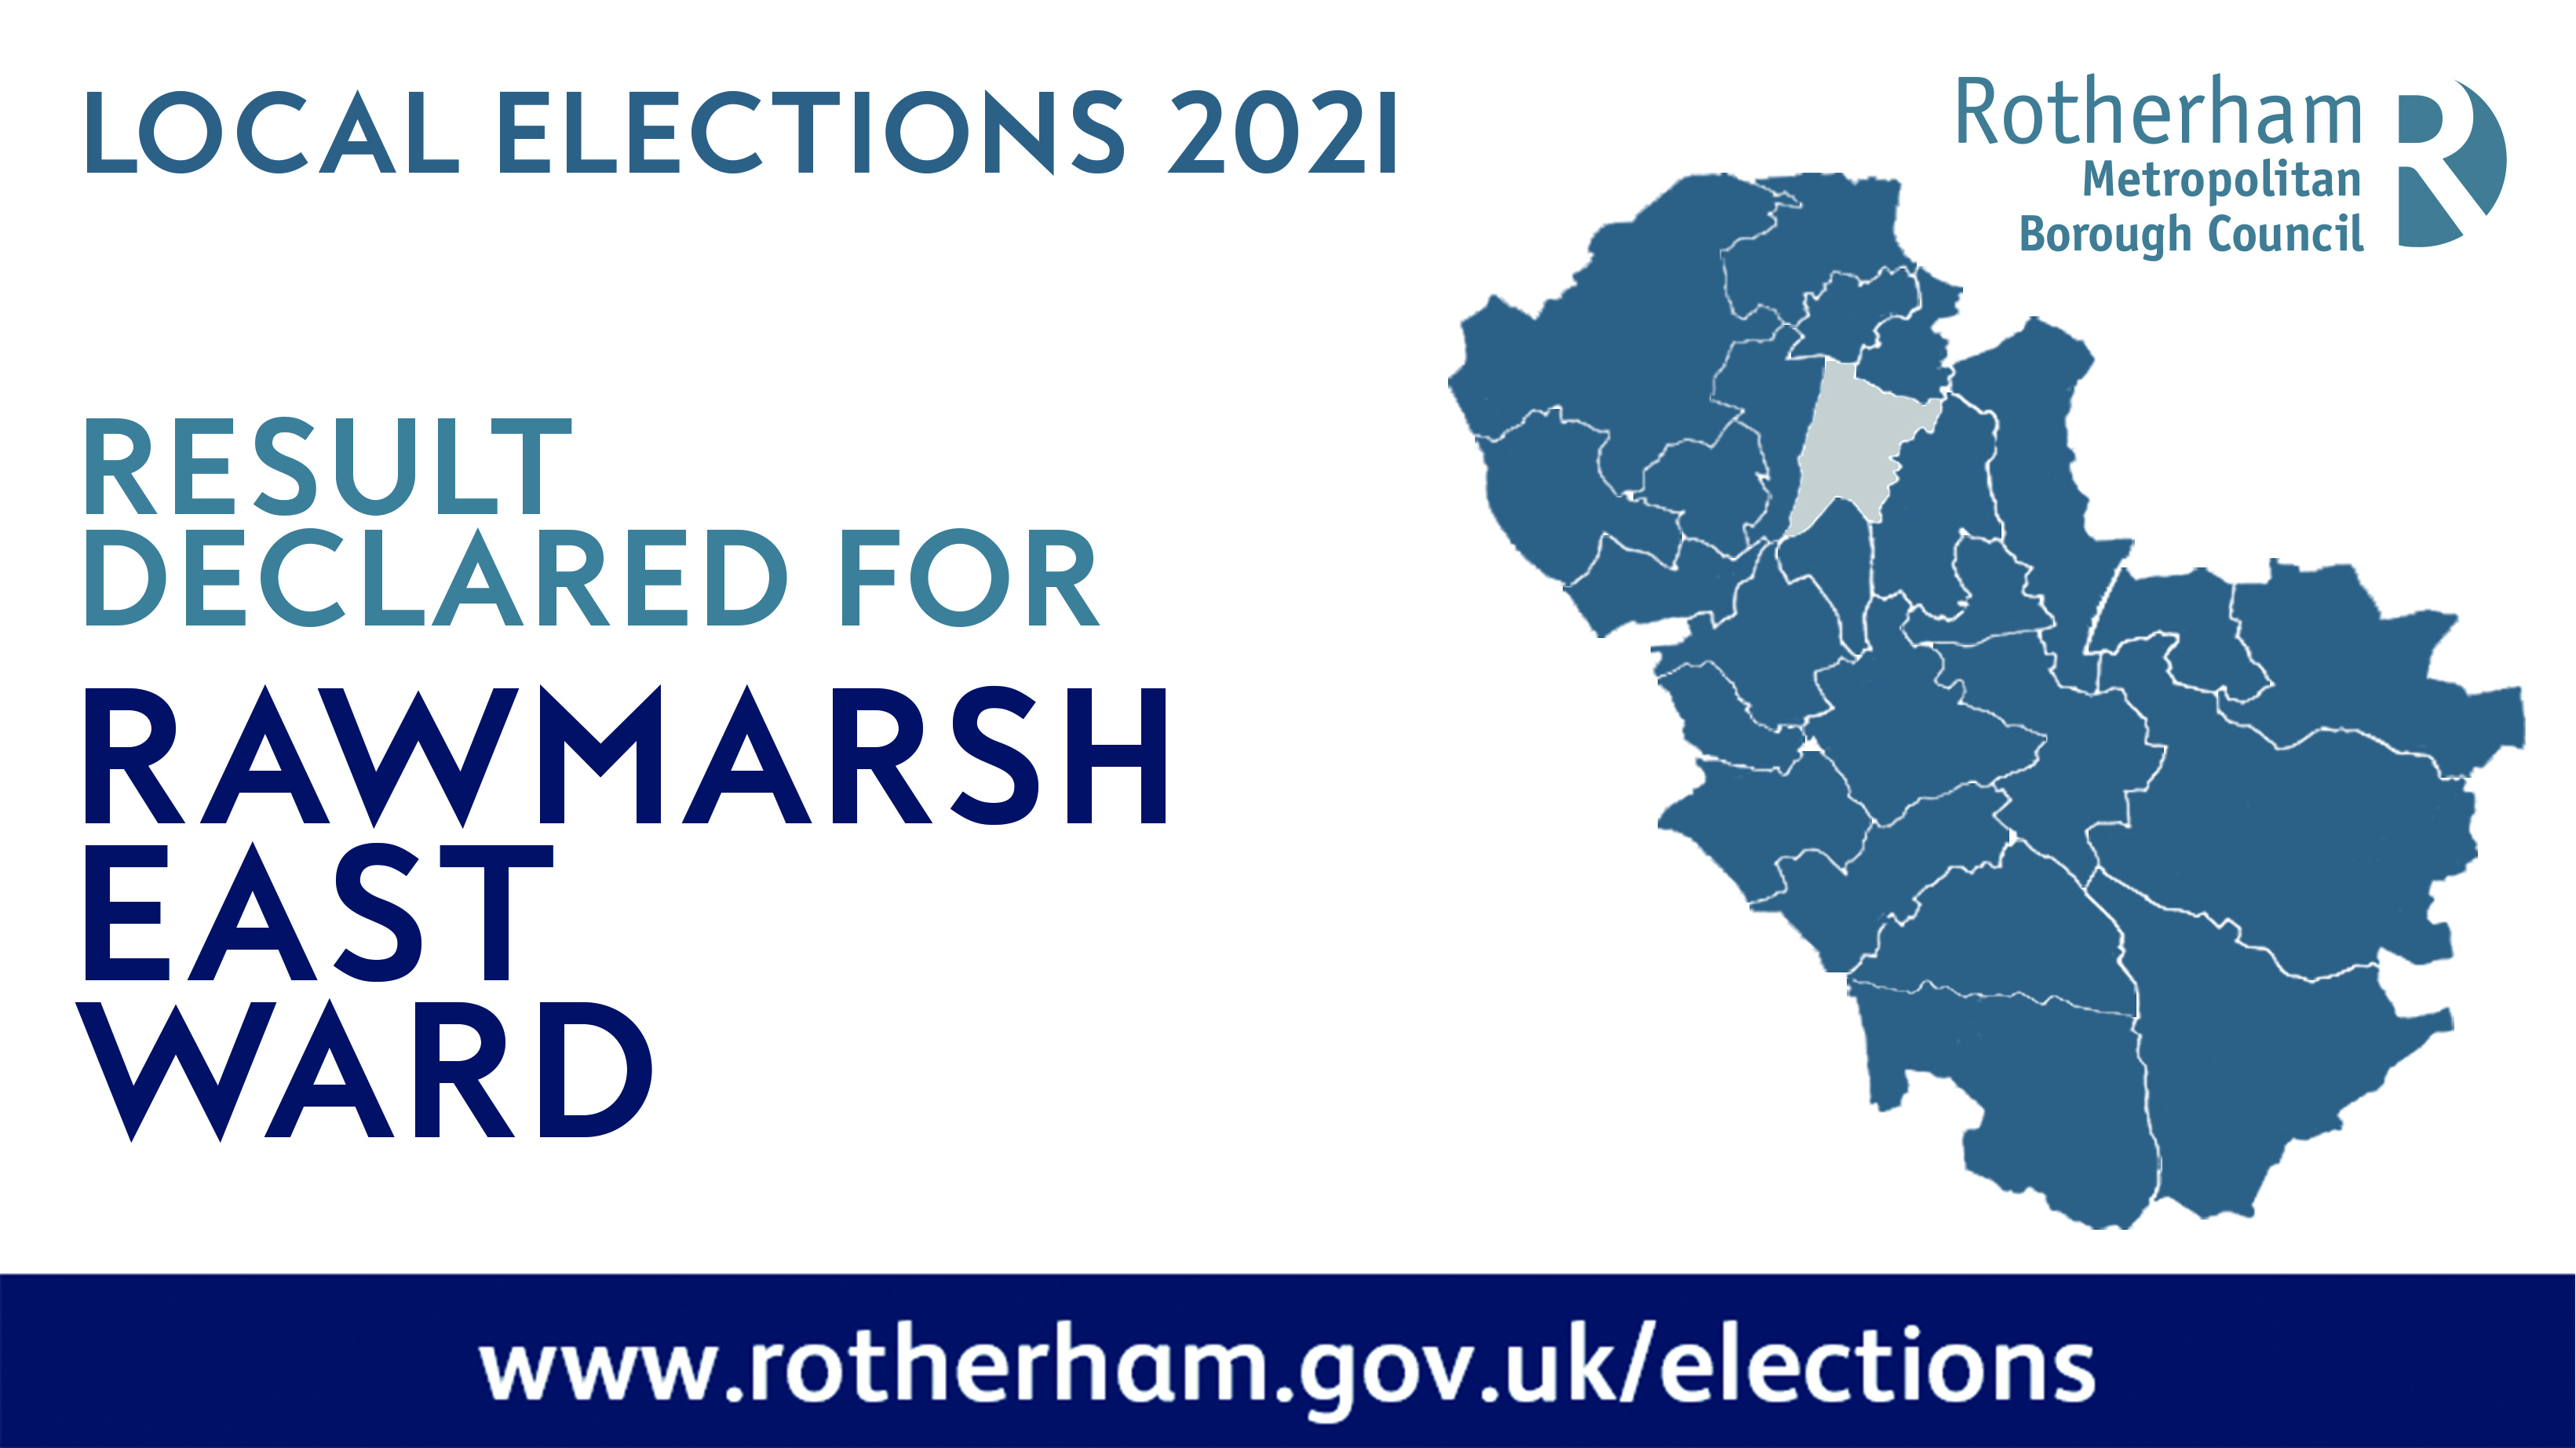 Rawmarsh East ward declared